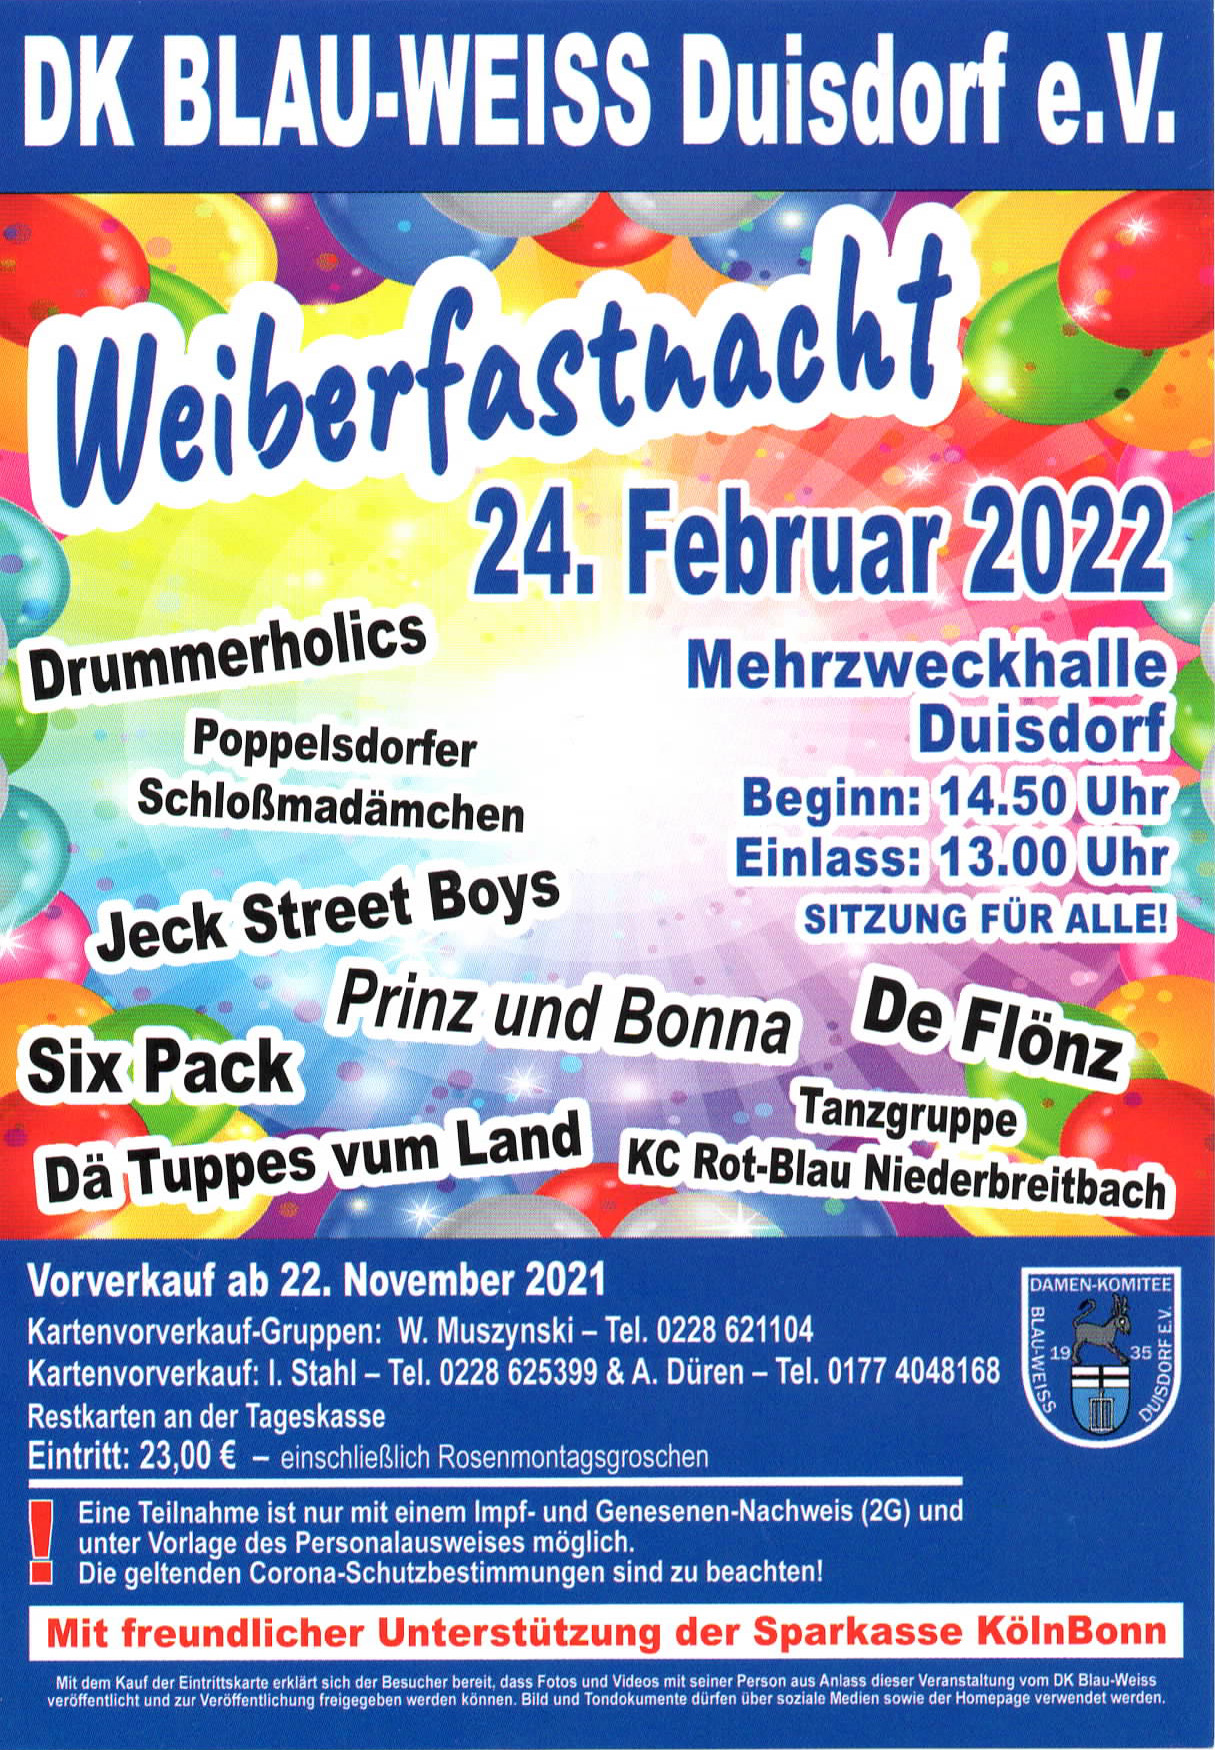 Weiberfastnacht 2022 Damen-Komitee Blau-Weiss Duisdorf e.V.